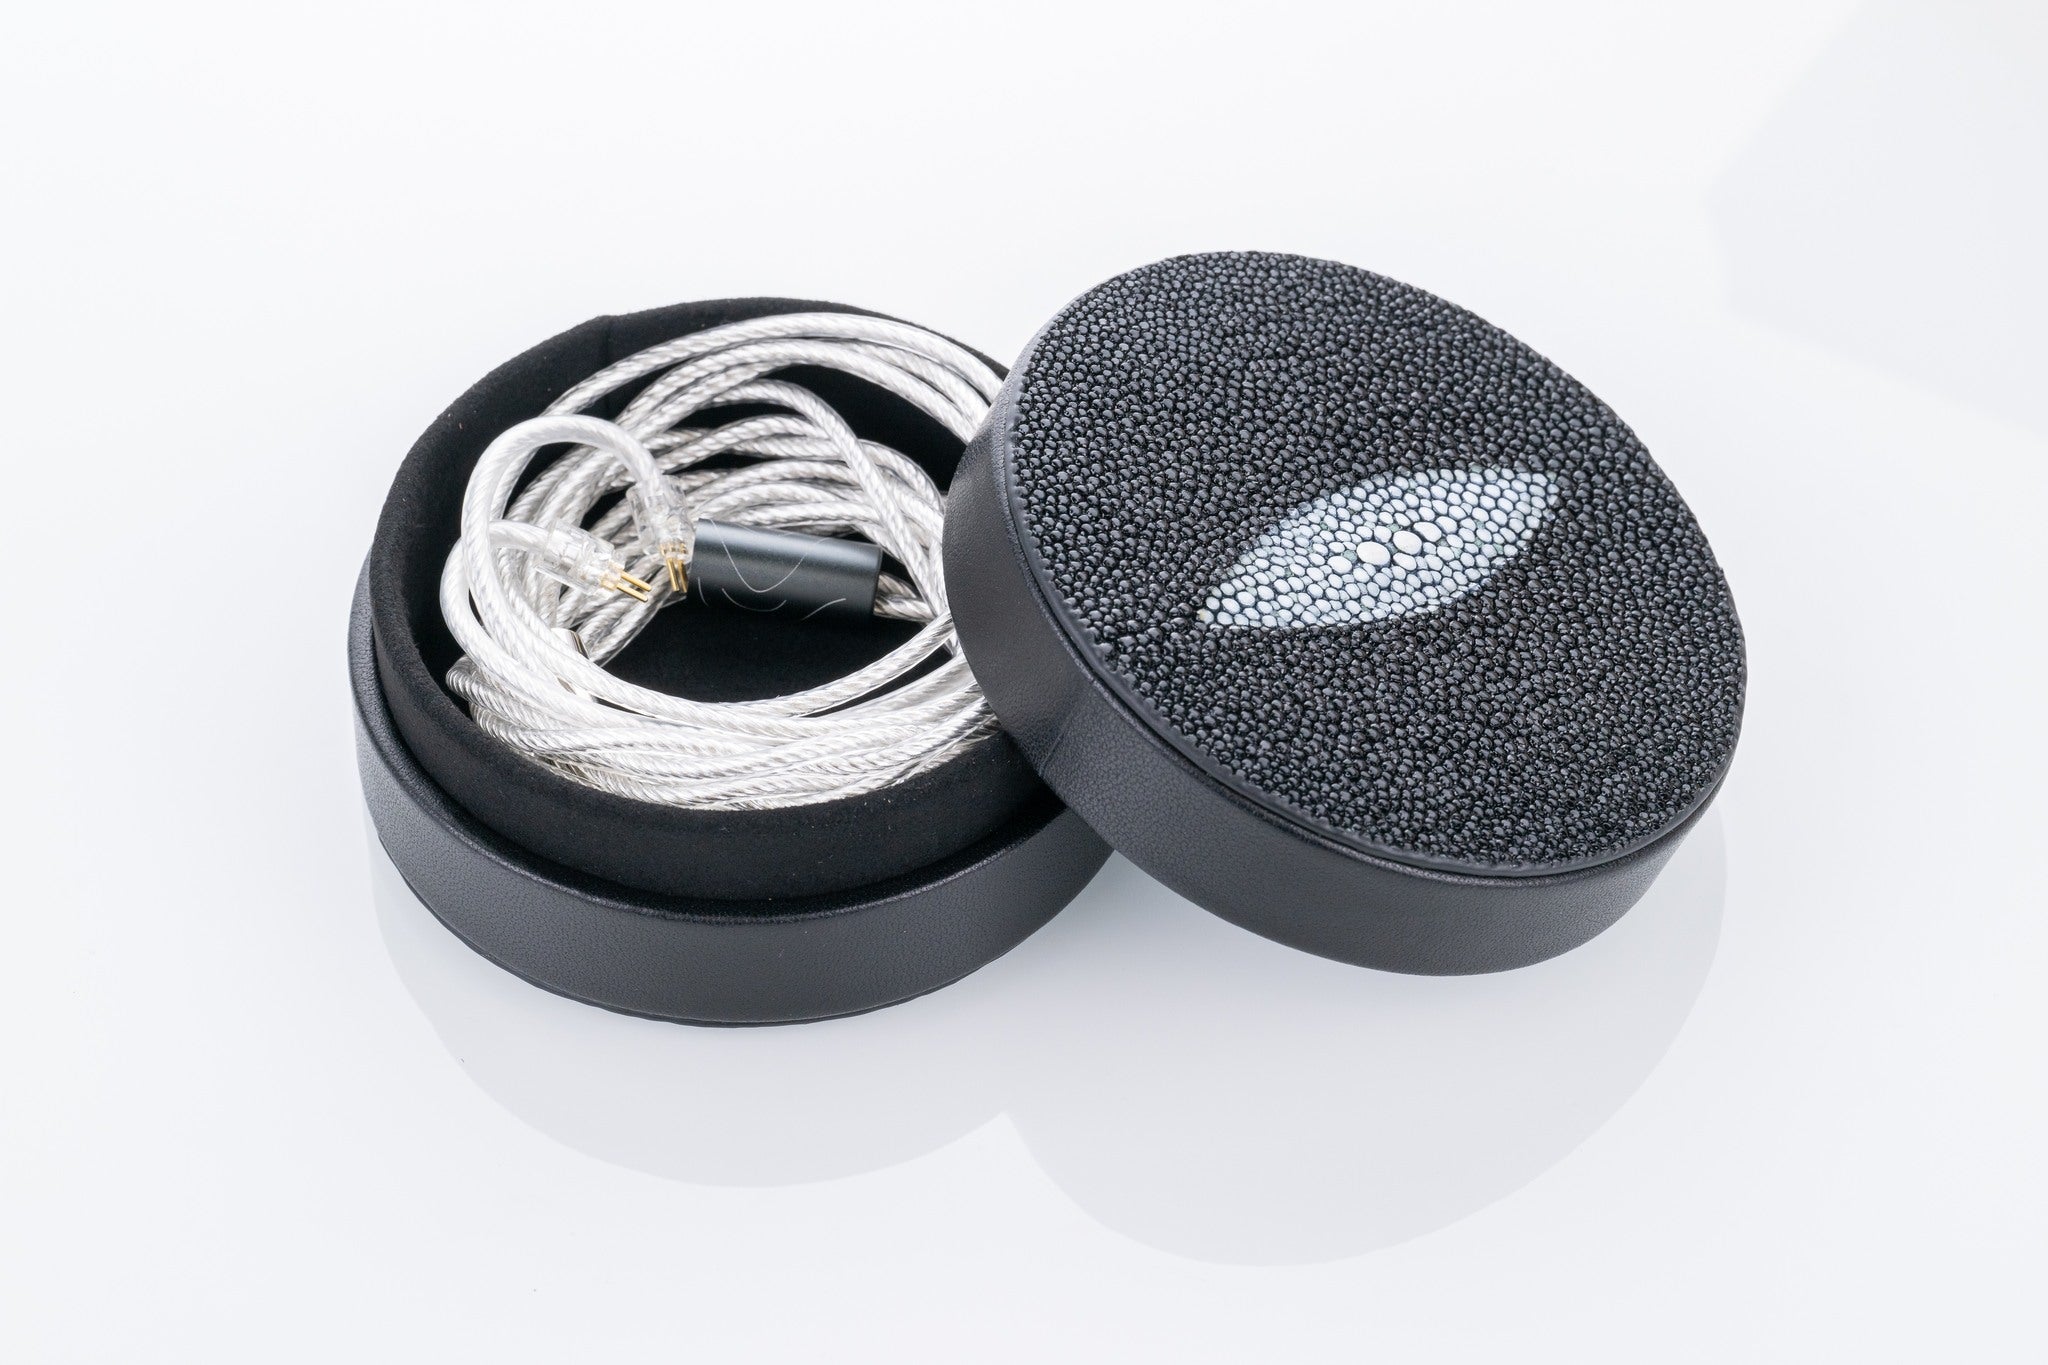 Moondrop BEAUTIFUL WORLD 雪月花 Limited Edition Super-Flagship Dynamic IEM In-ear Monitor Earphone